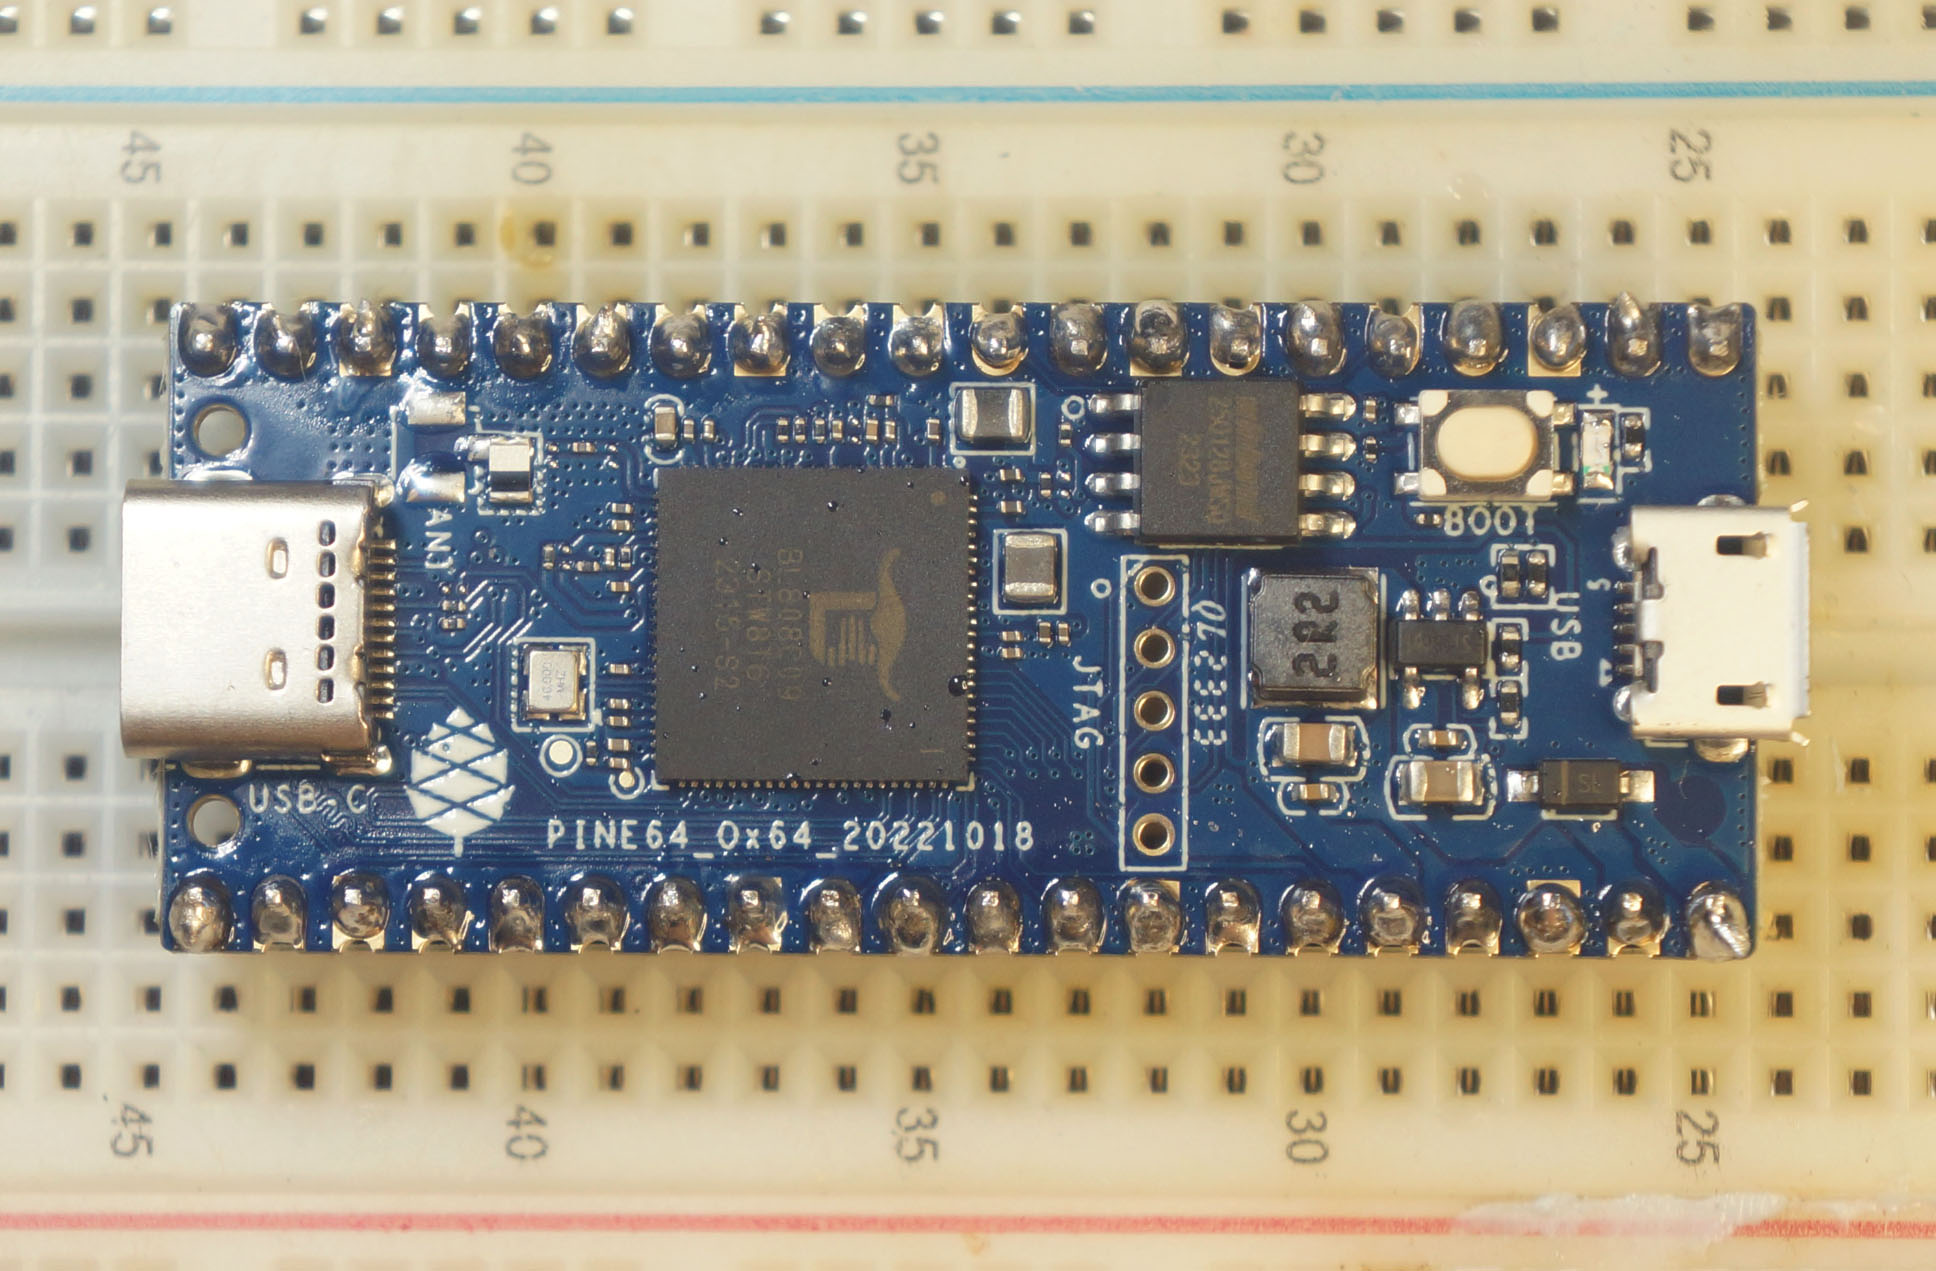 Pine64 Ox64 64-bit RISC-V SBC (Sorry for my substandard soldering)